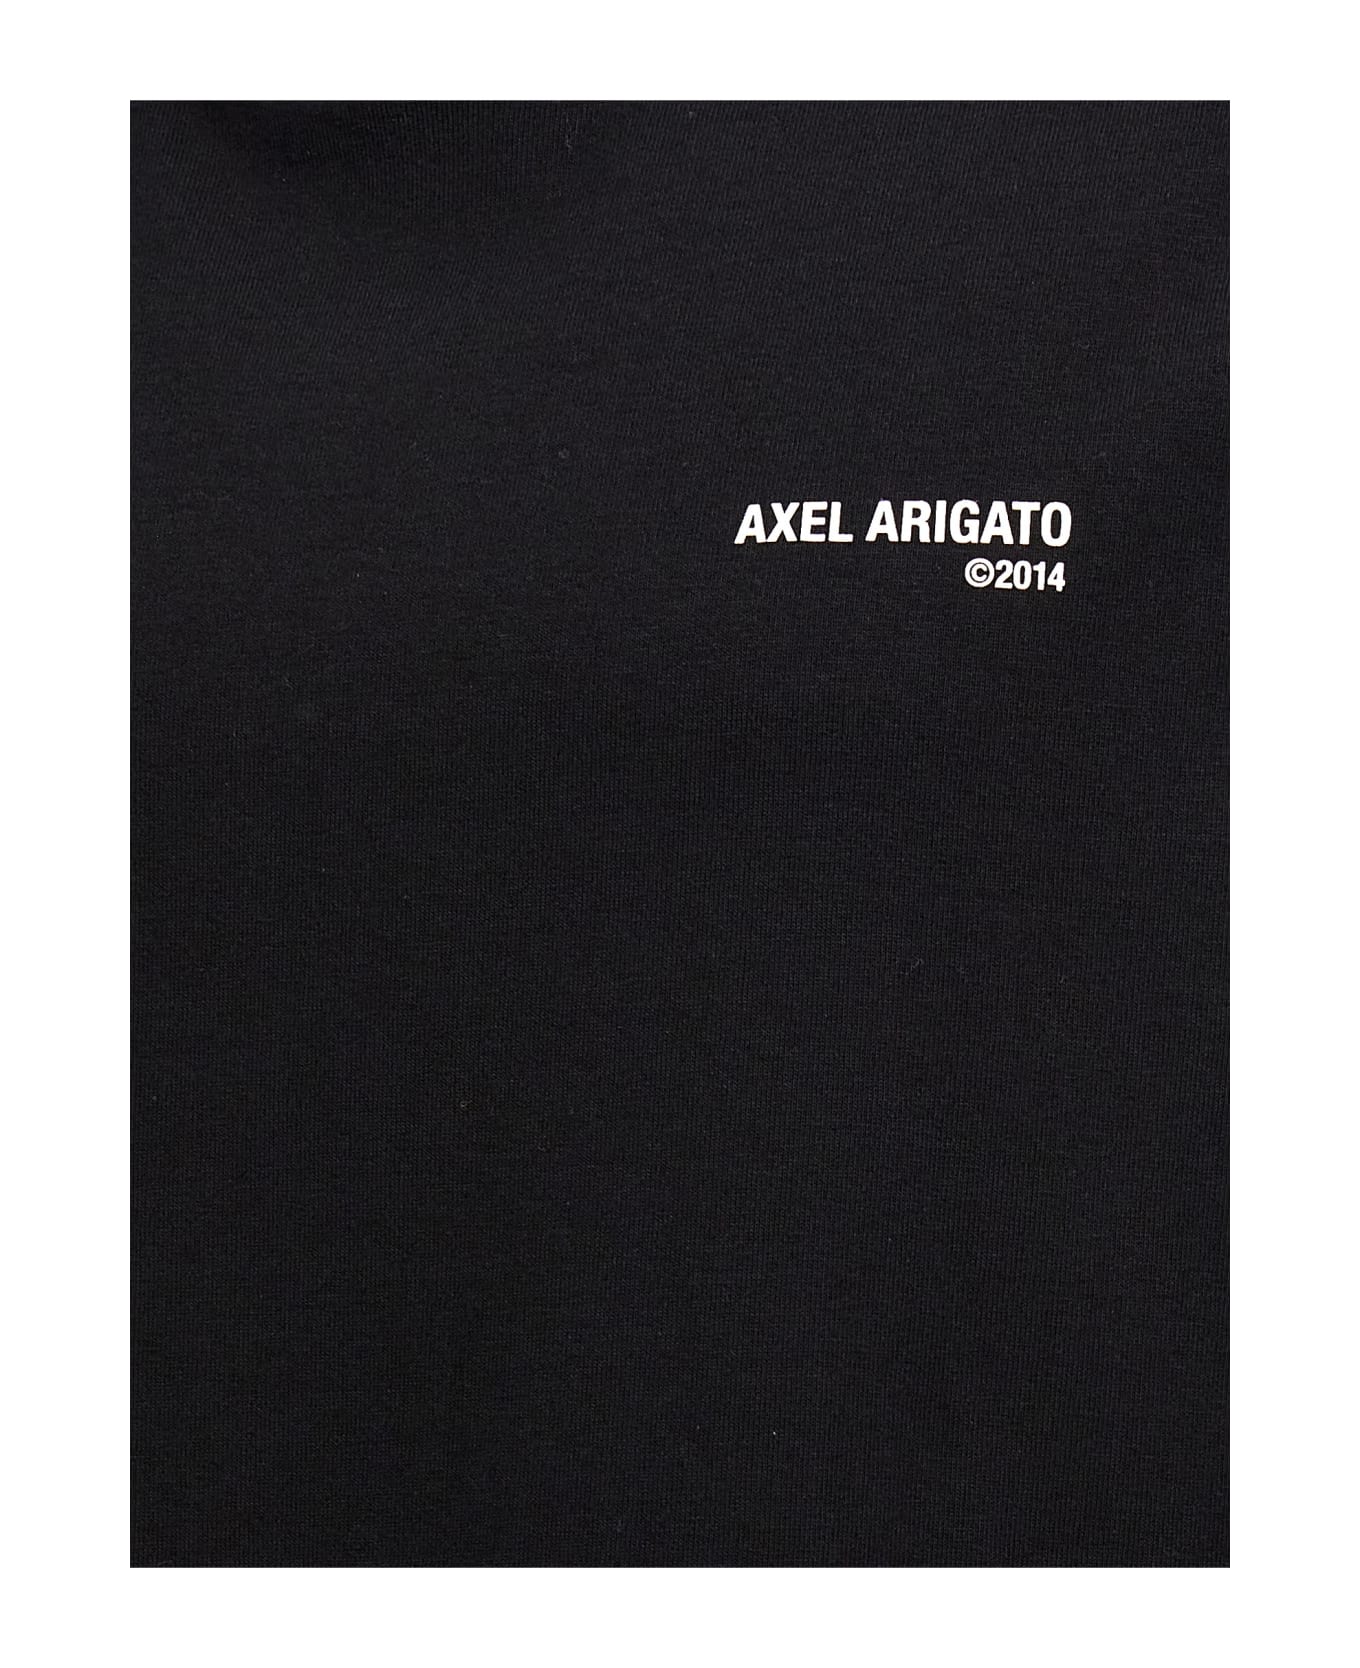 Axel Arigato 'legacy' T-shirt - Black  